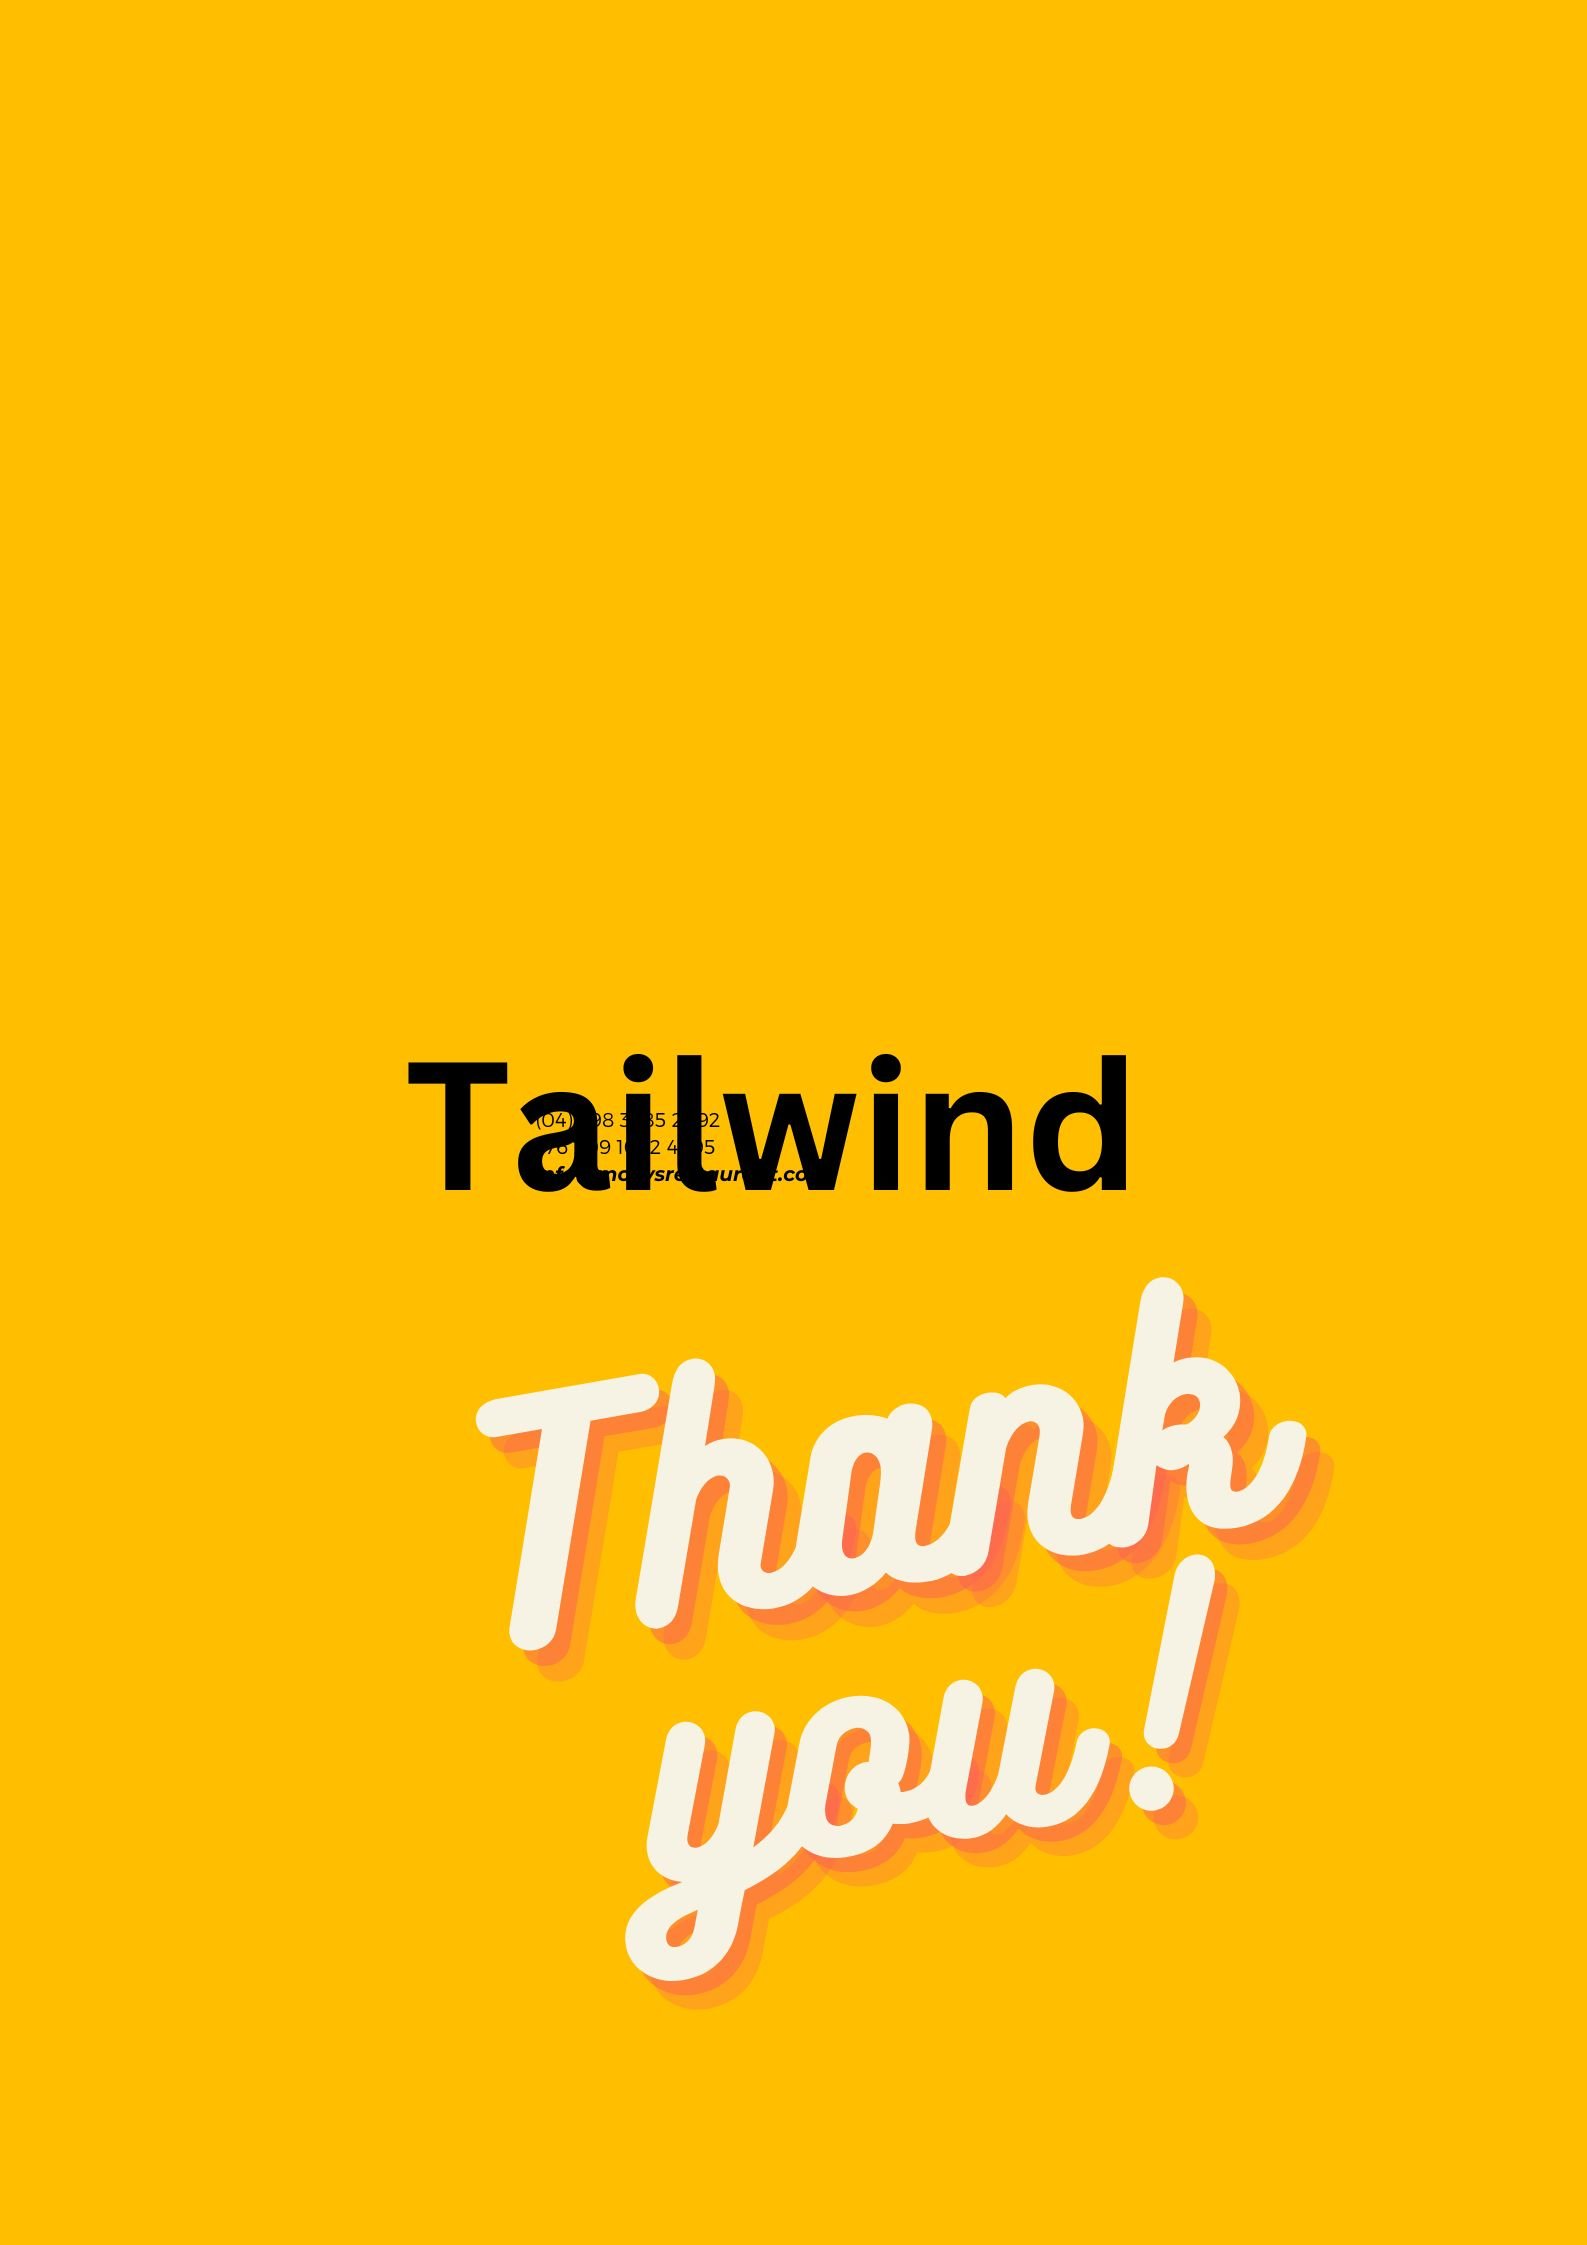 tailwind nutrition